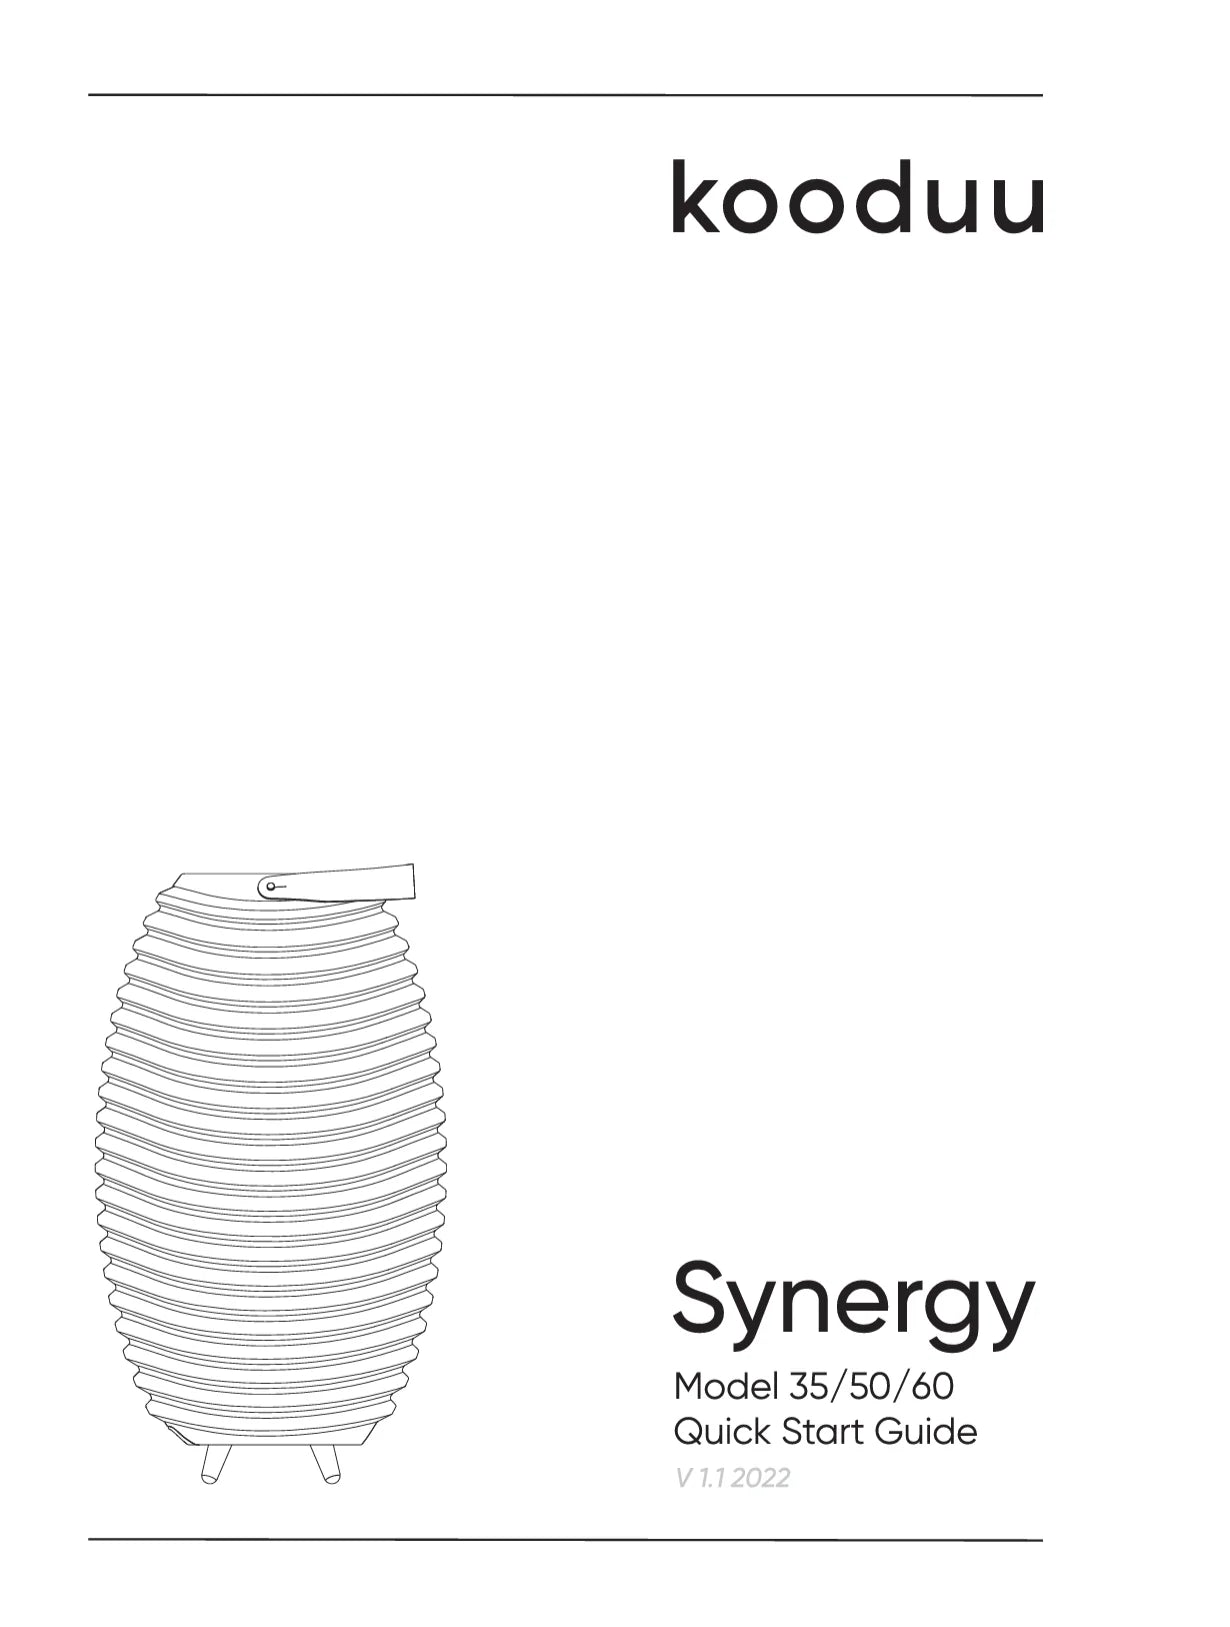 Manual title for Kooduu Synergy lamps models 